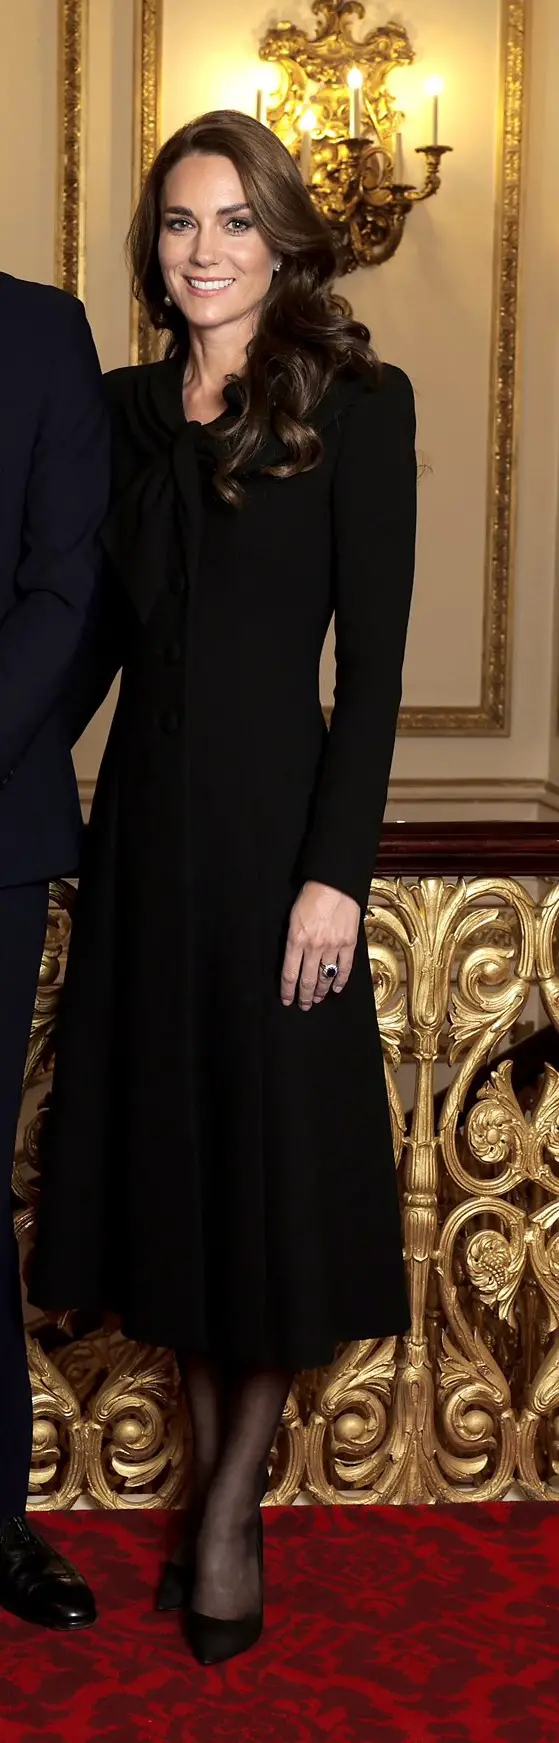 Princess of Wales Catherine at Buckingham Palace reception